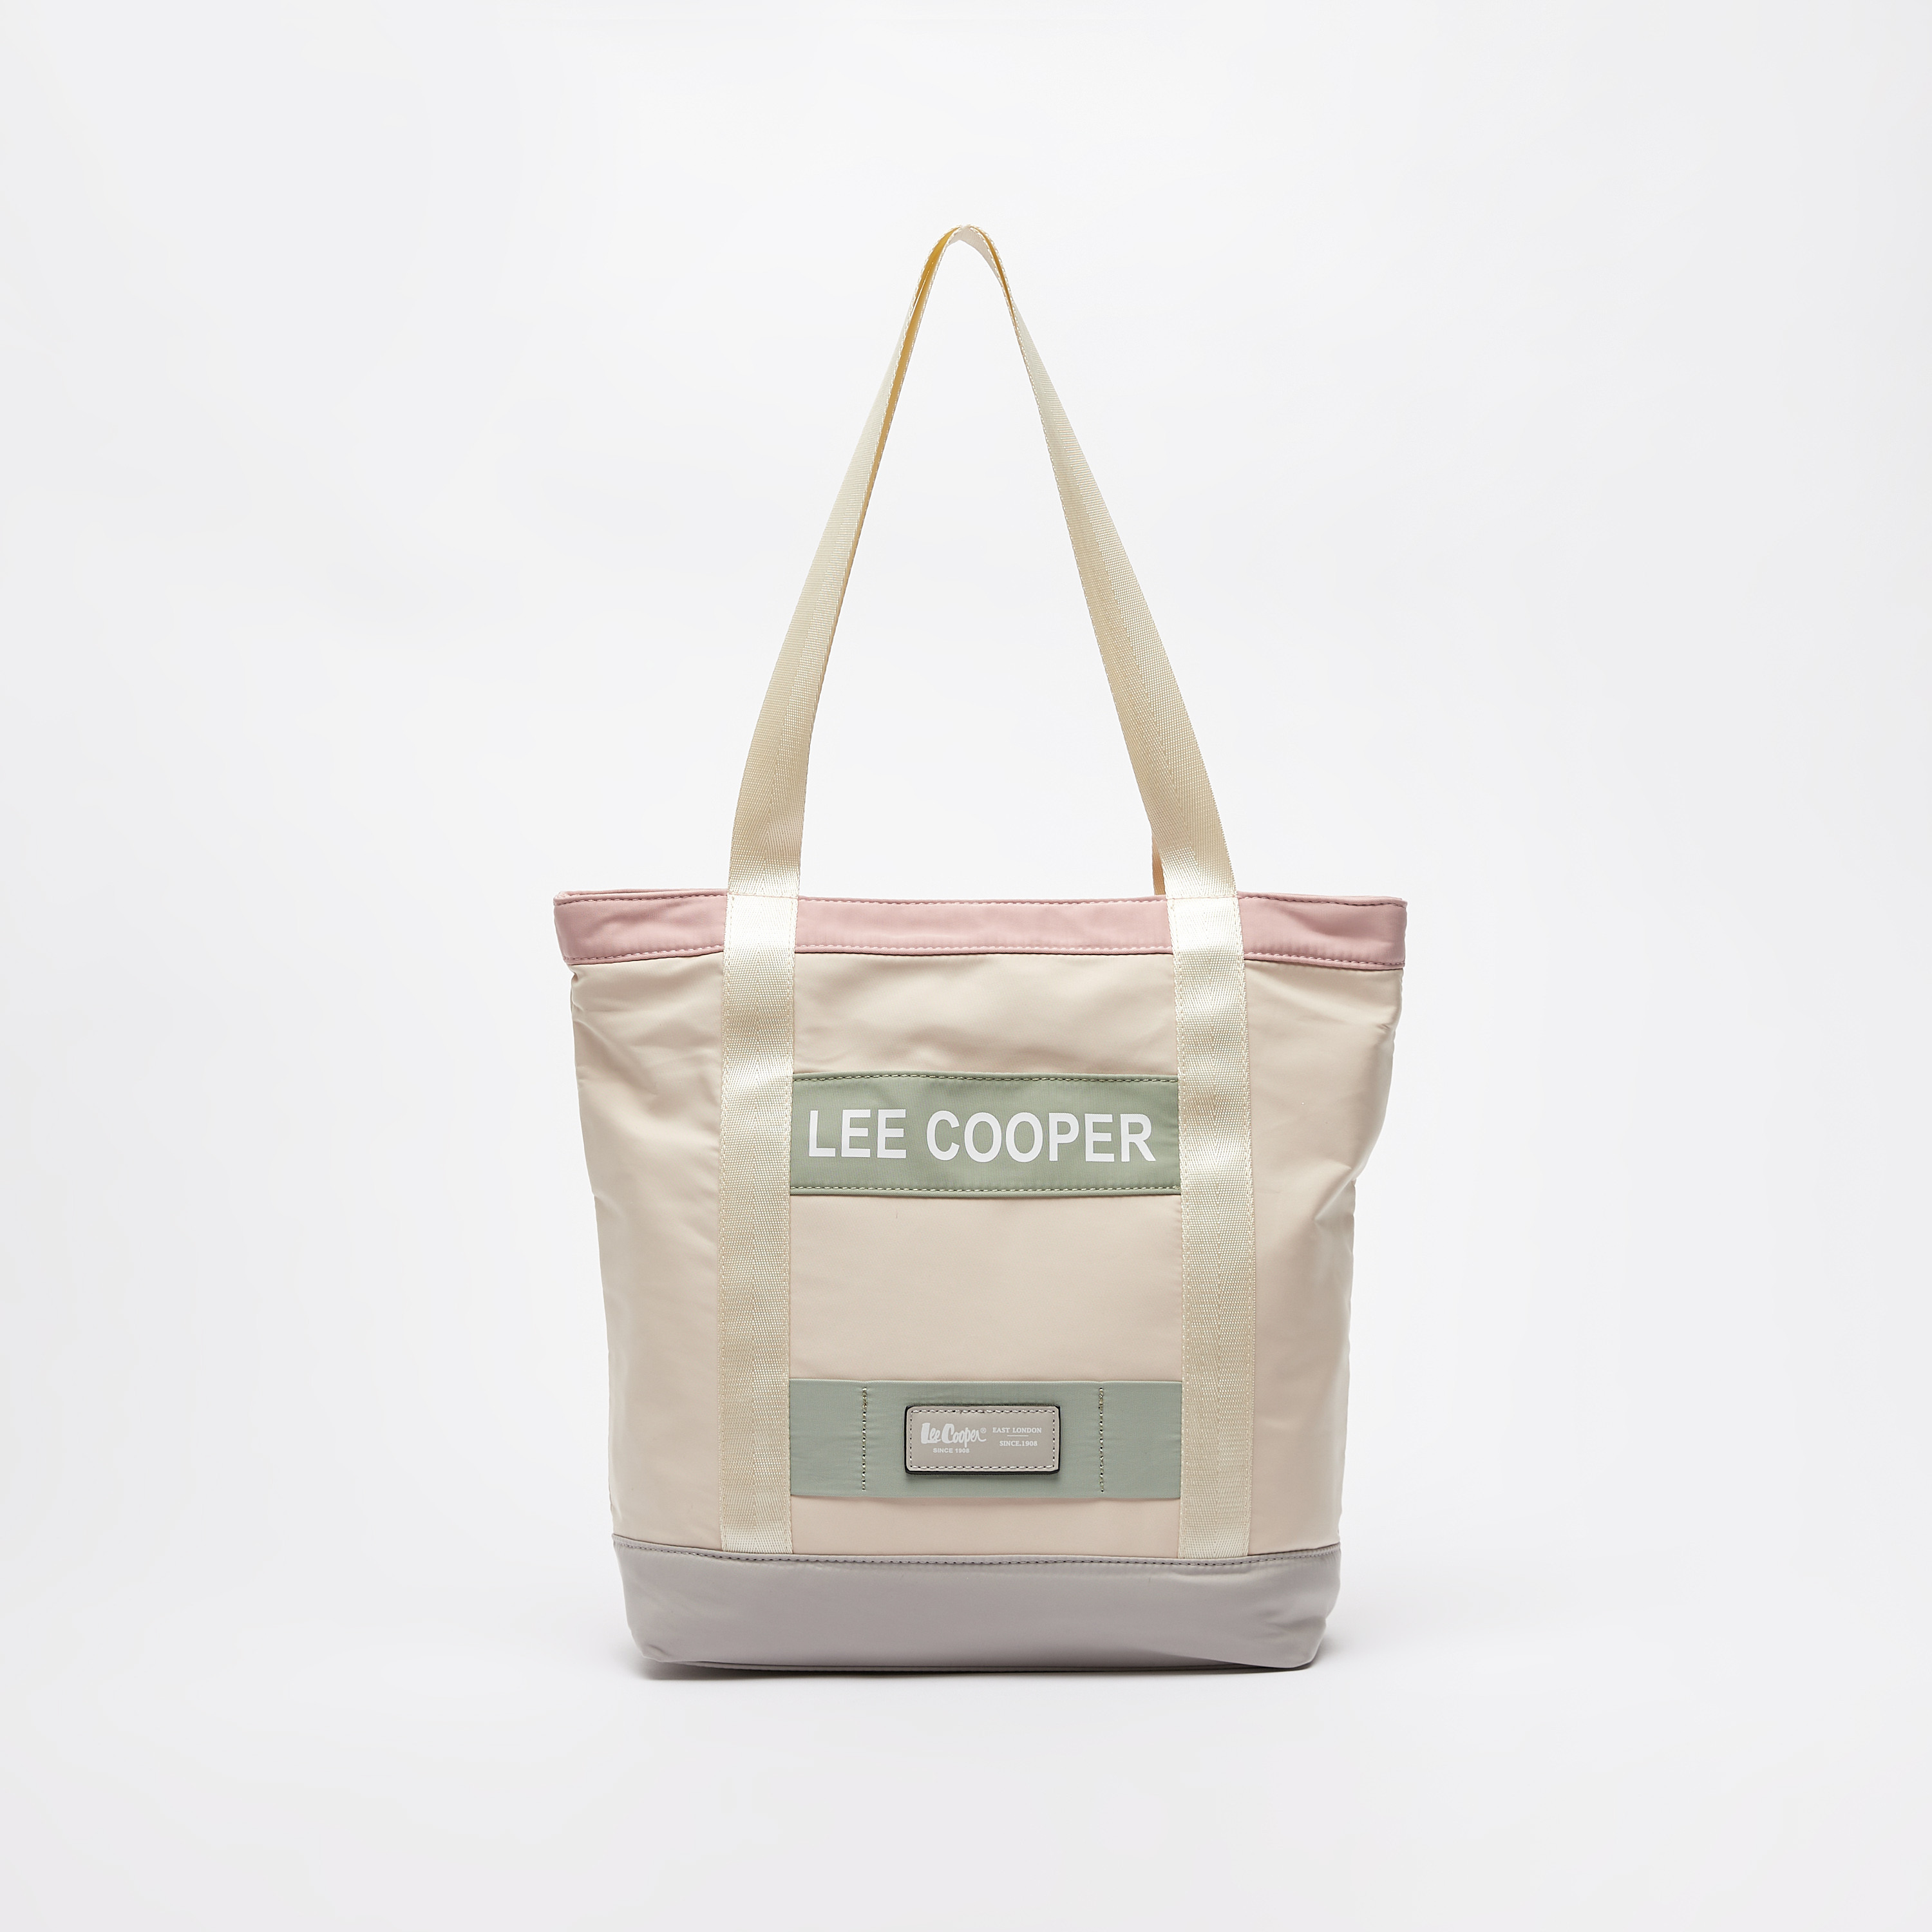 Shop Lee Cooper Bowler Bag with Adjustable Strap and Zip Closure Online |  Splash Saudi